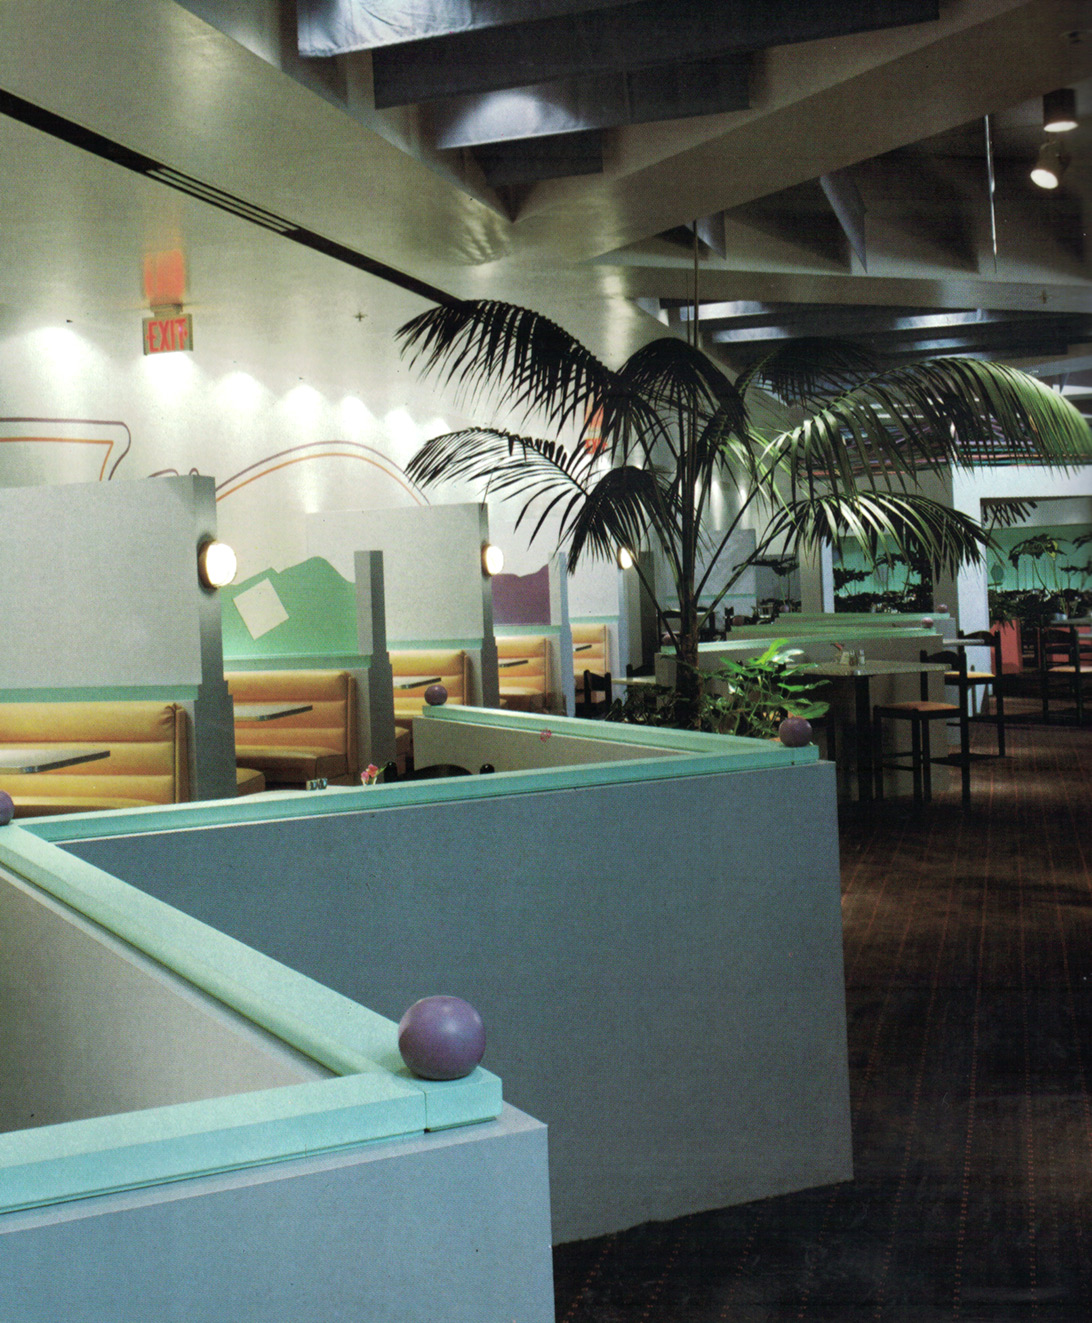 80s Restaurant Design